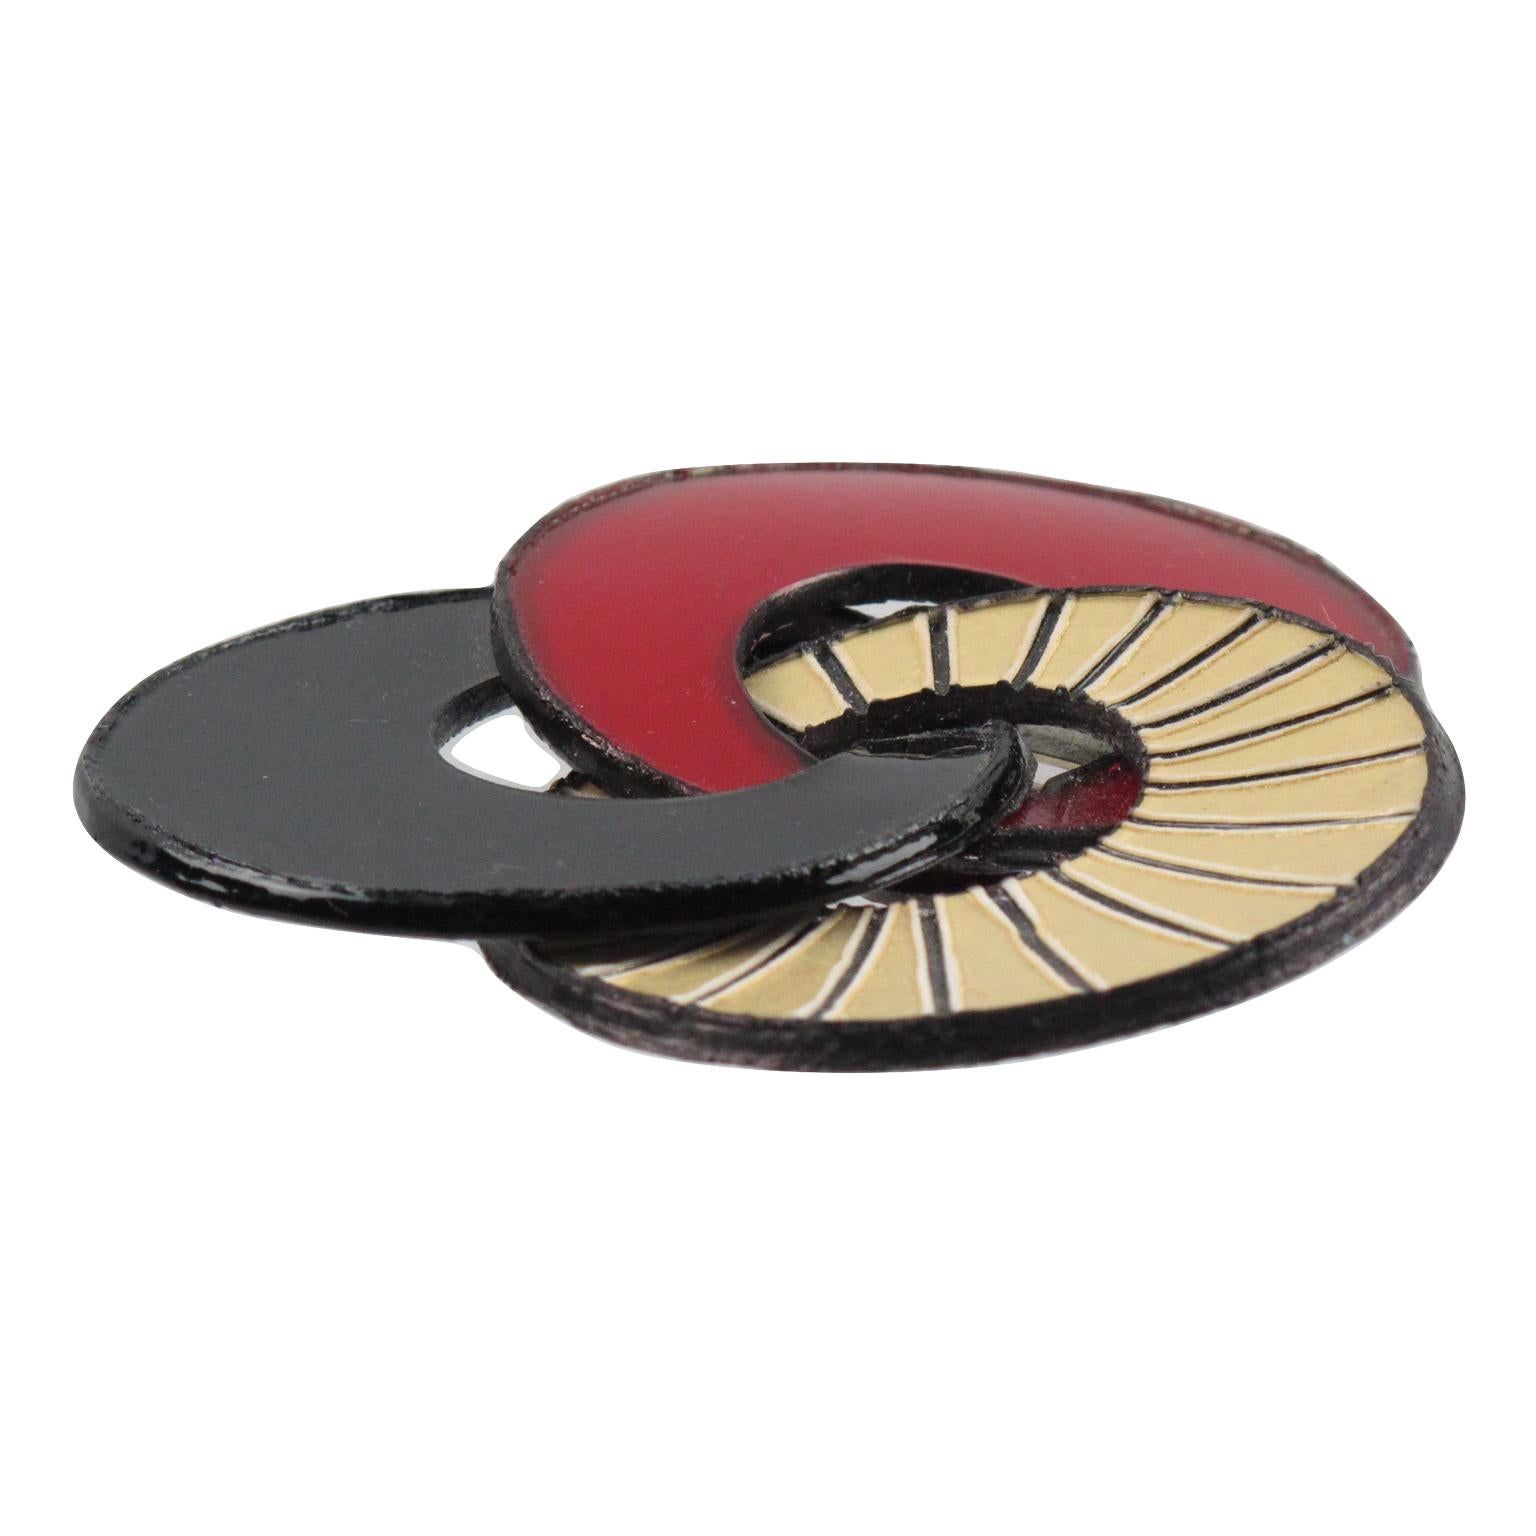 Cilea Paris Art Deco Inspired Red & Black Resin Pin Brooch 1